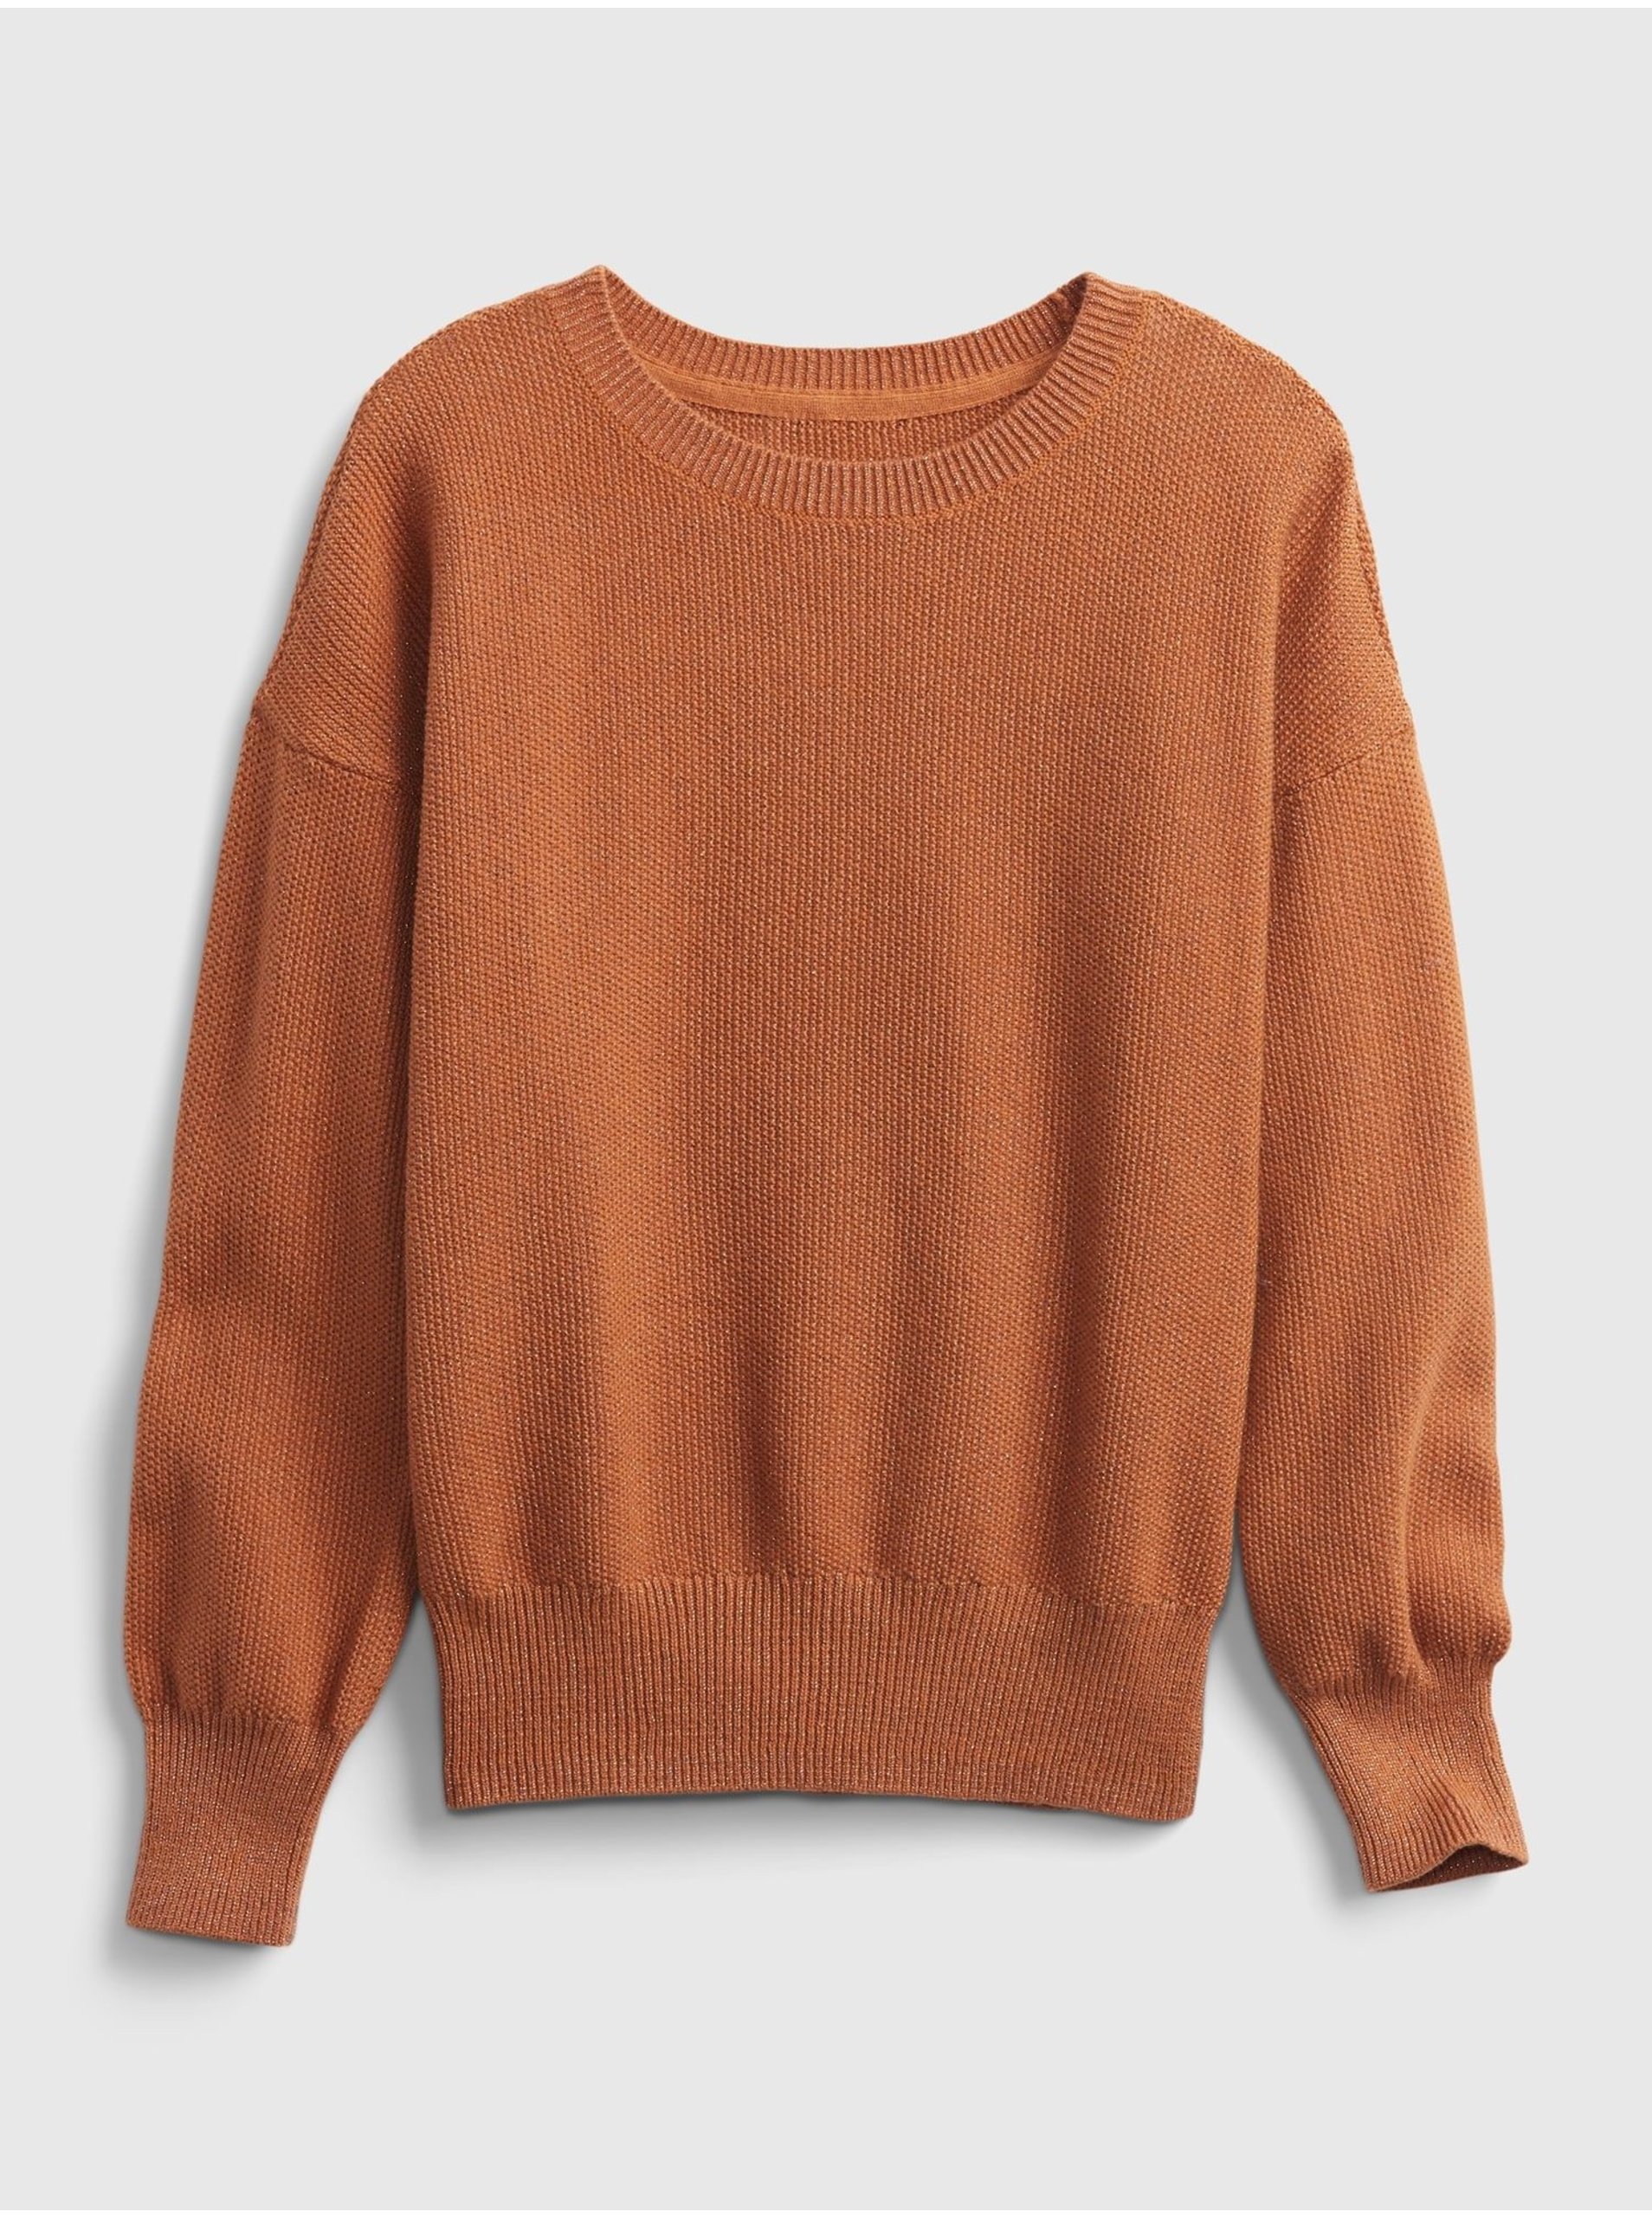 E-shop Hnědý holčičí svetr solid slouchy pullover